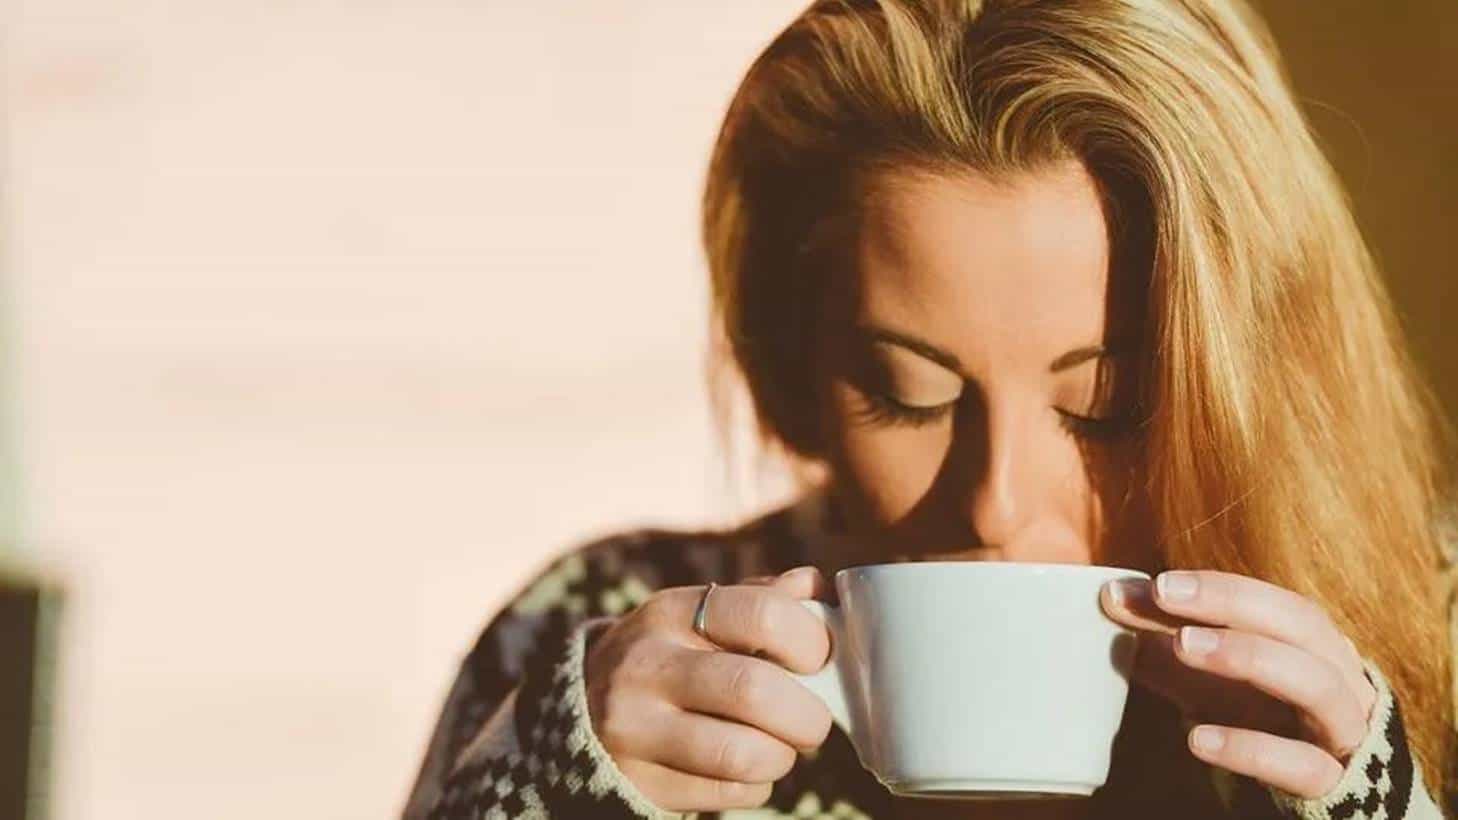 Tomar chá de valeriana para conseguir dormir pode ter efeitos colaterais